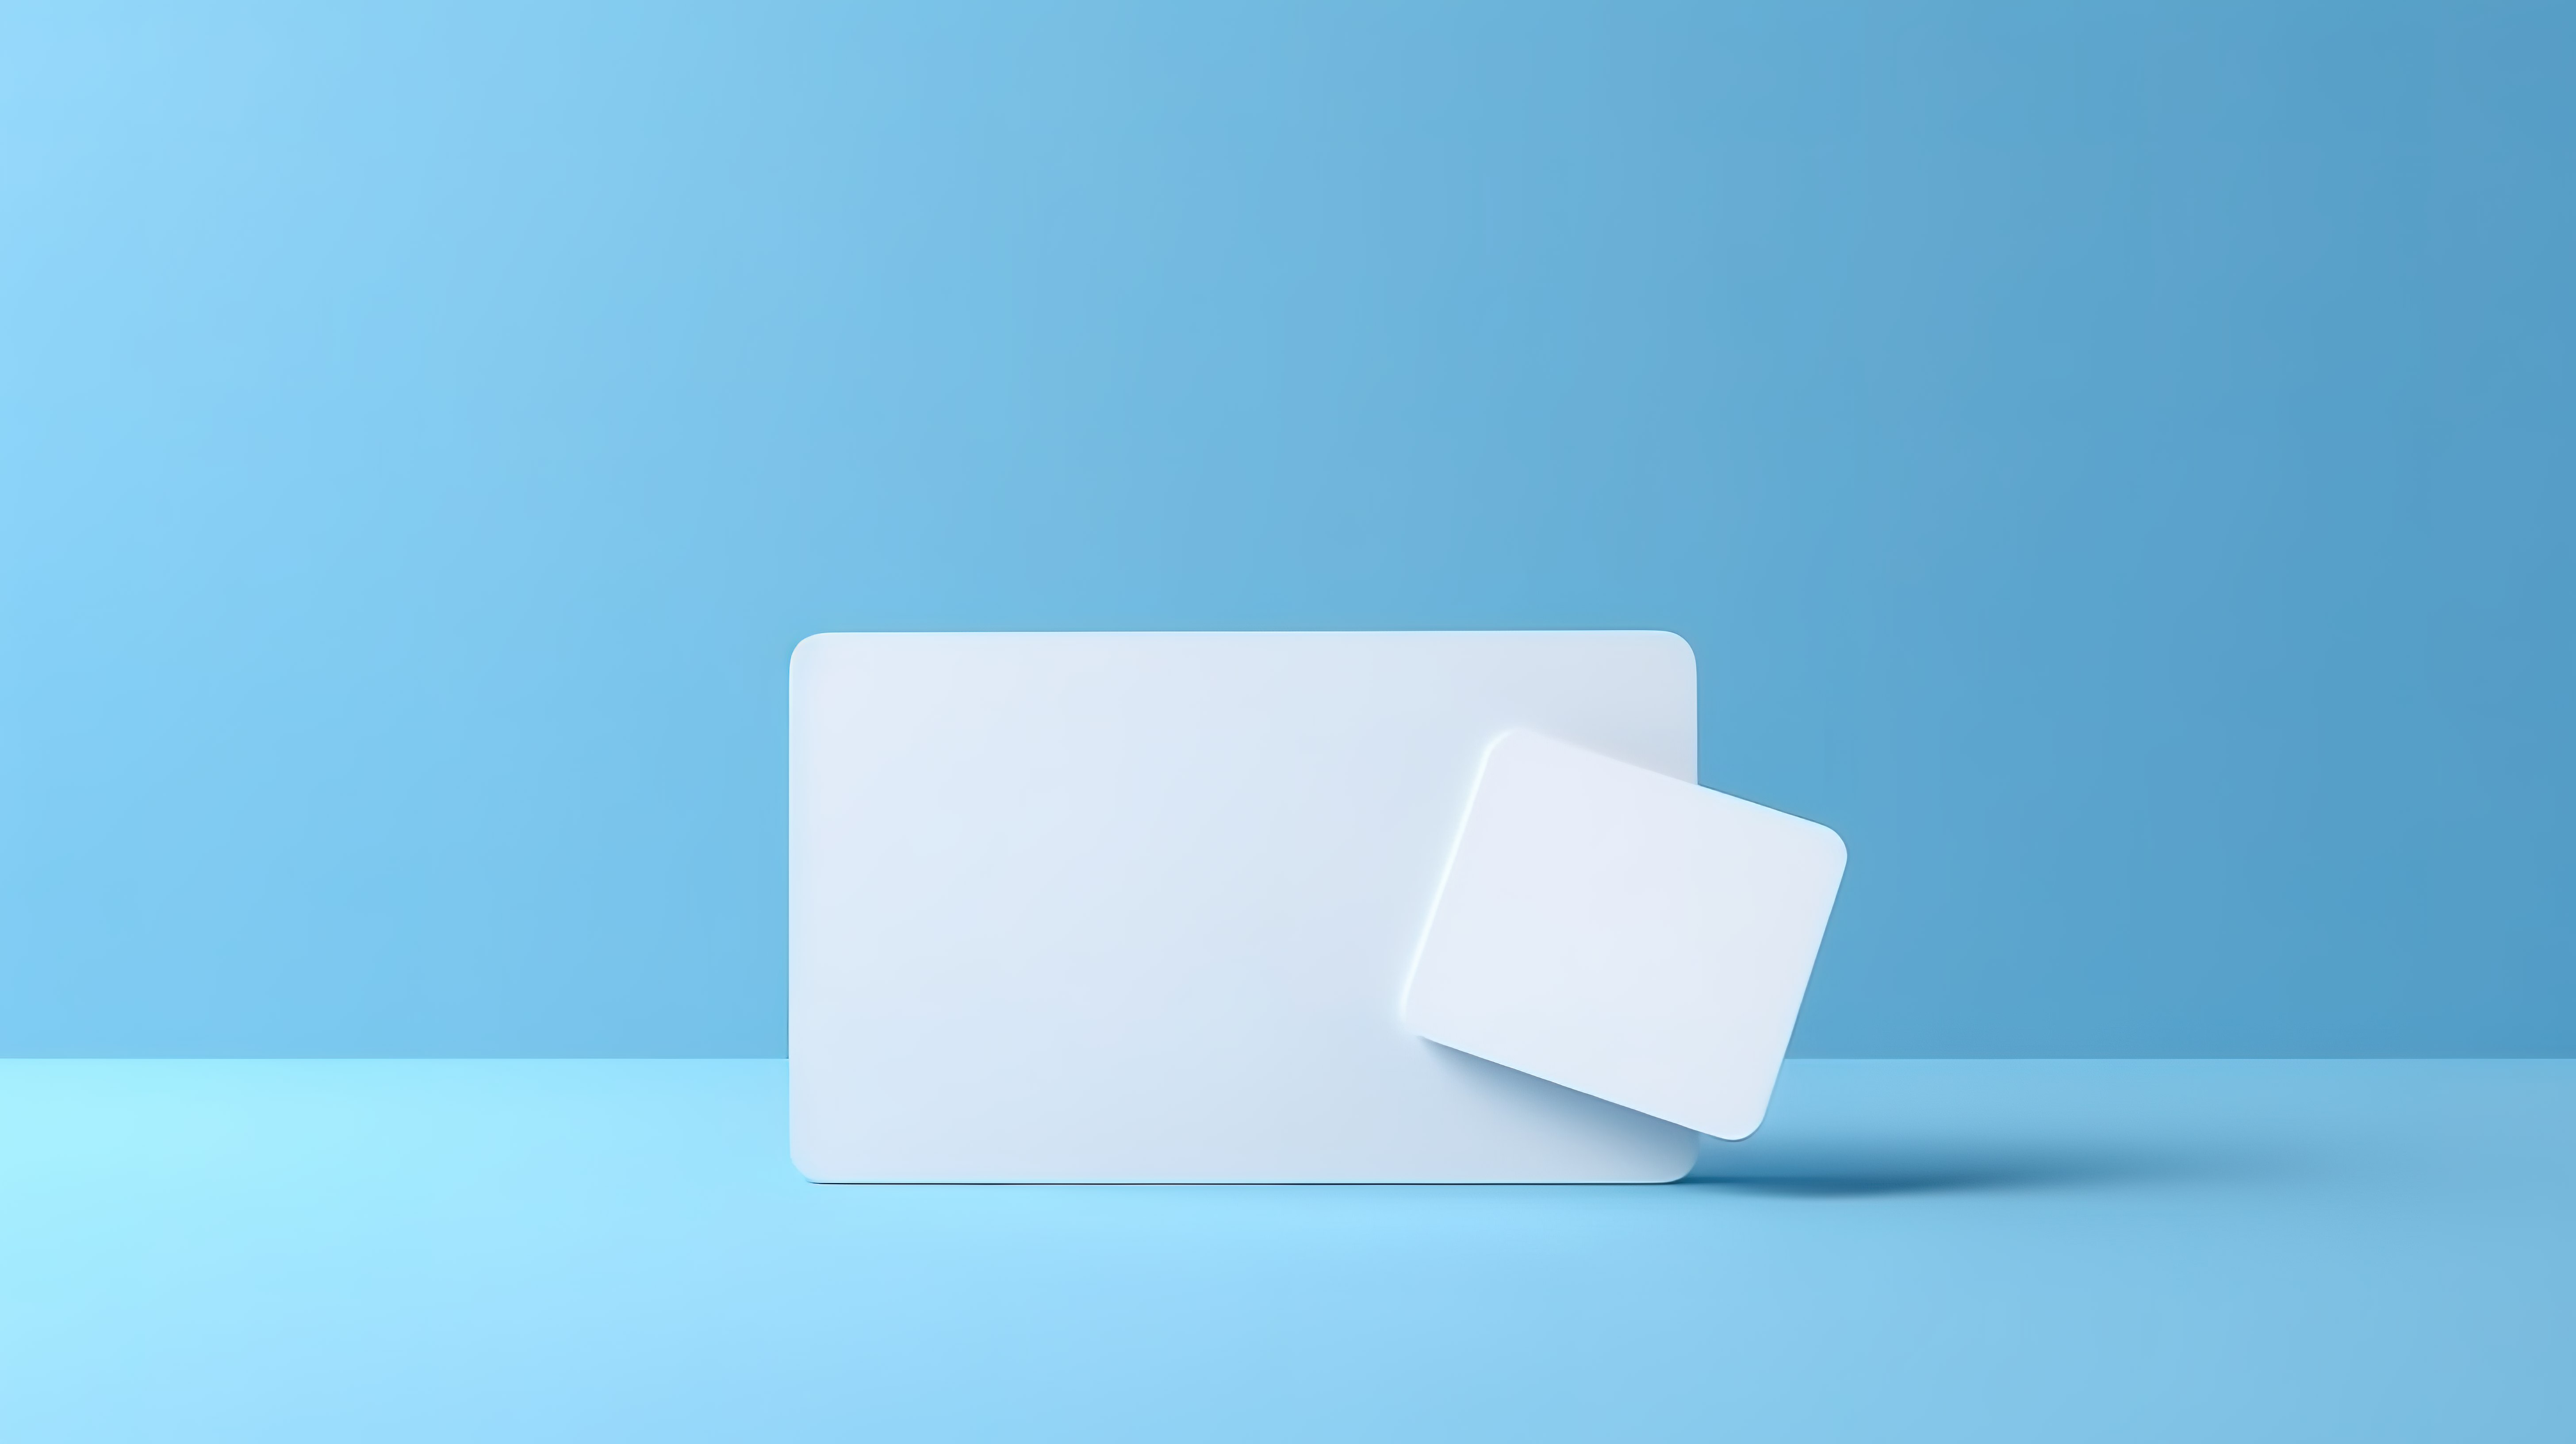 3d 在蓝色背景上渲染空的企业名称会员或礼品卡模型图片